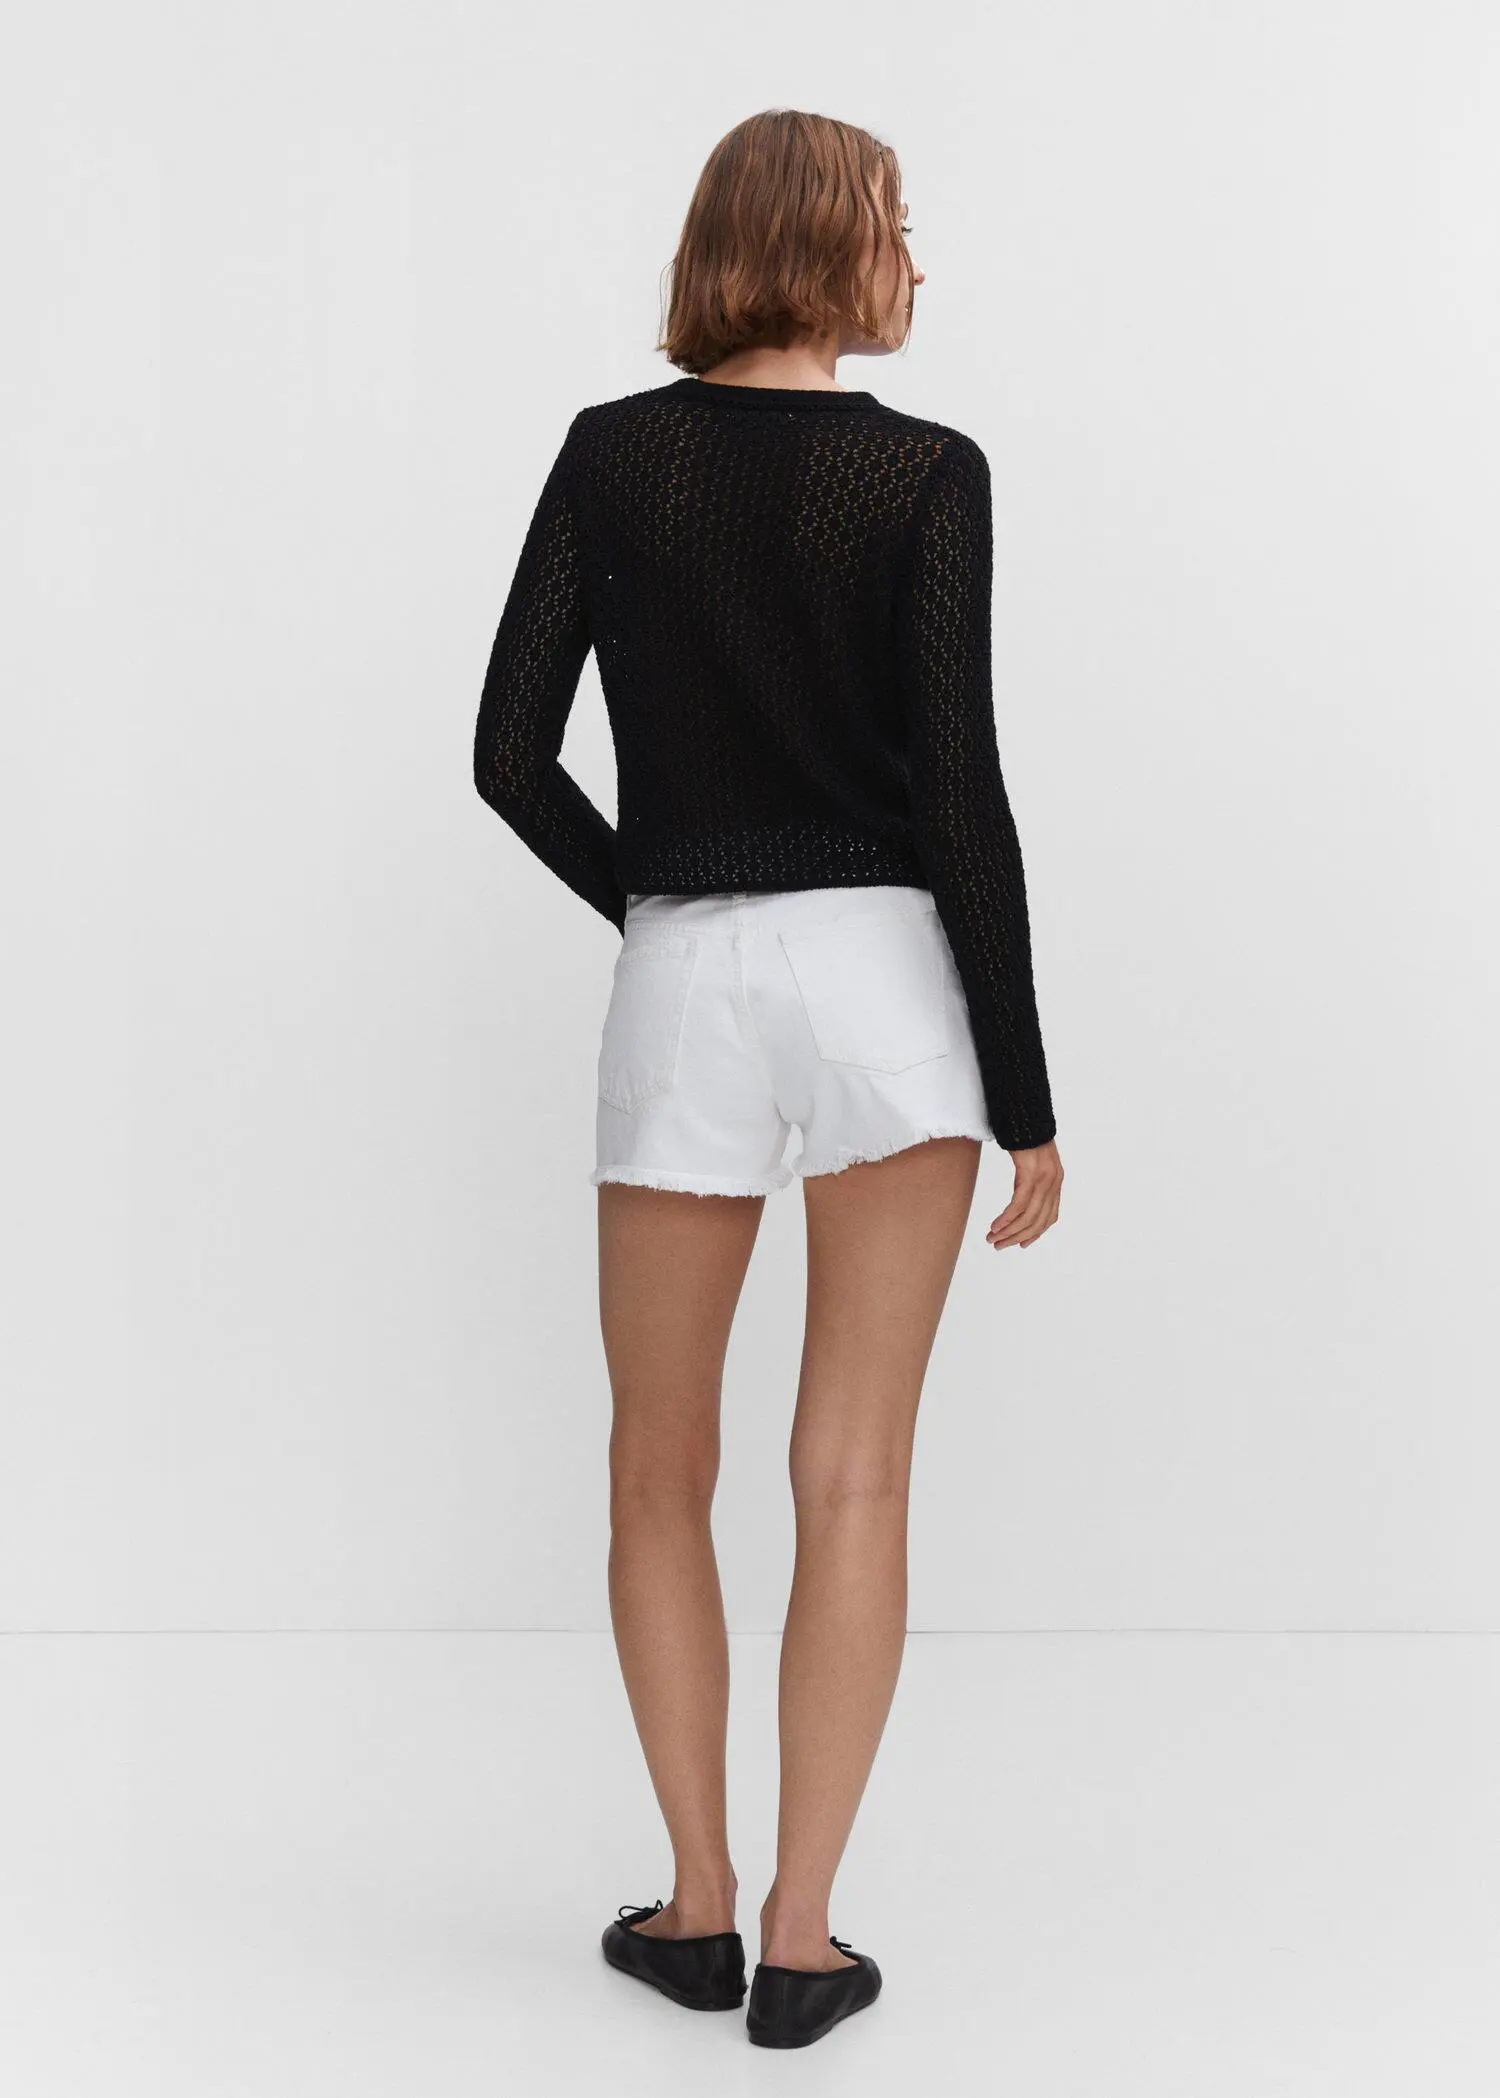 Mango Broken denim shorts. a woman wearing white shorts and a black sweater. 